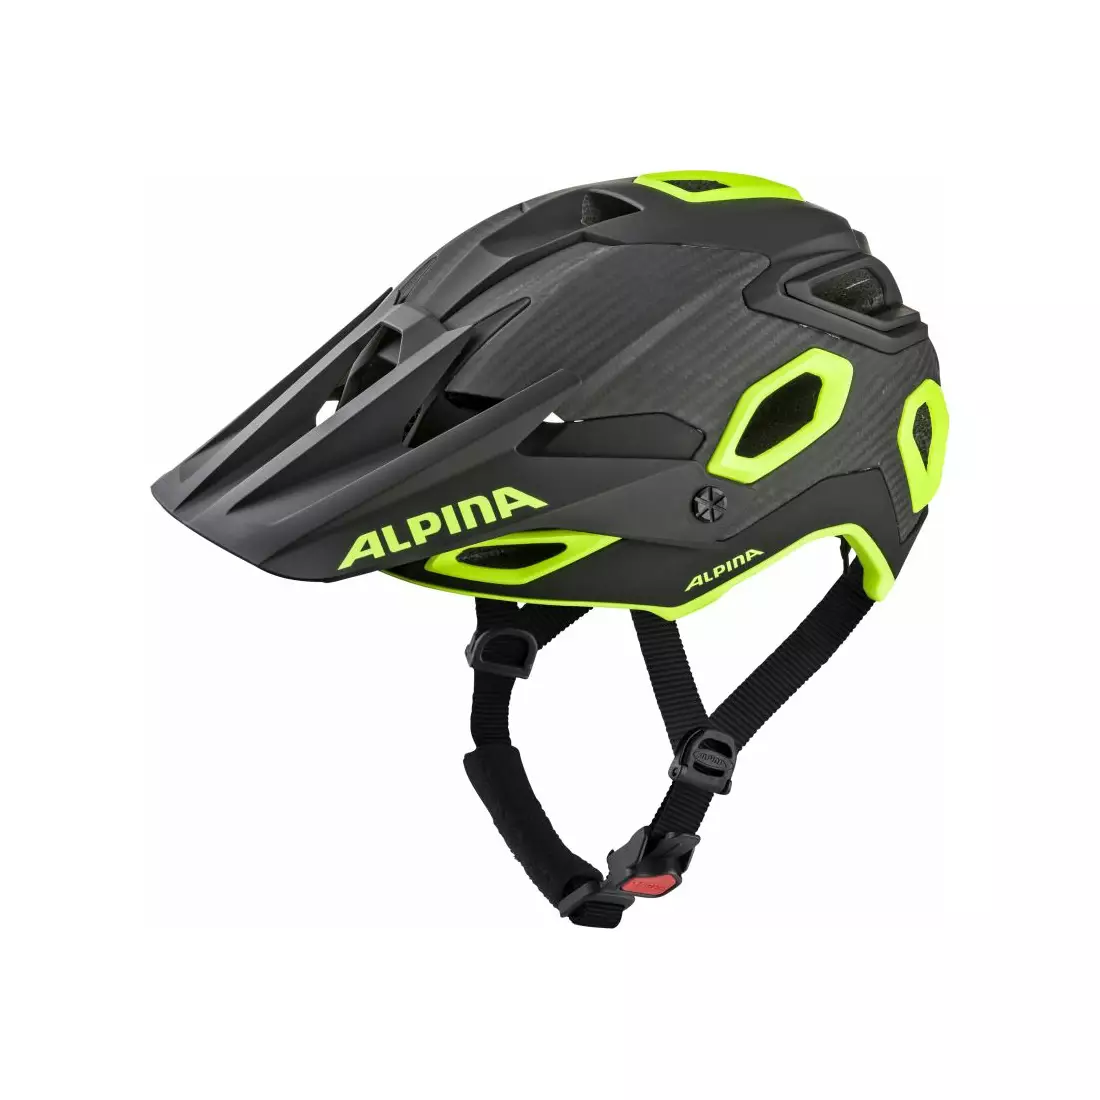 ALPINA ROOTAGE Bicycle helmet BLACK-NEON-YELLOW 